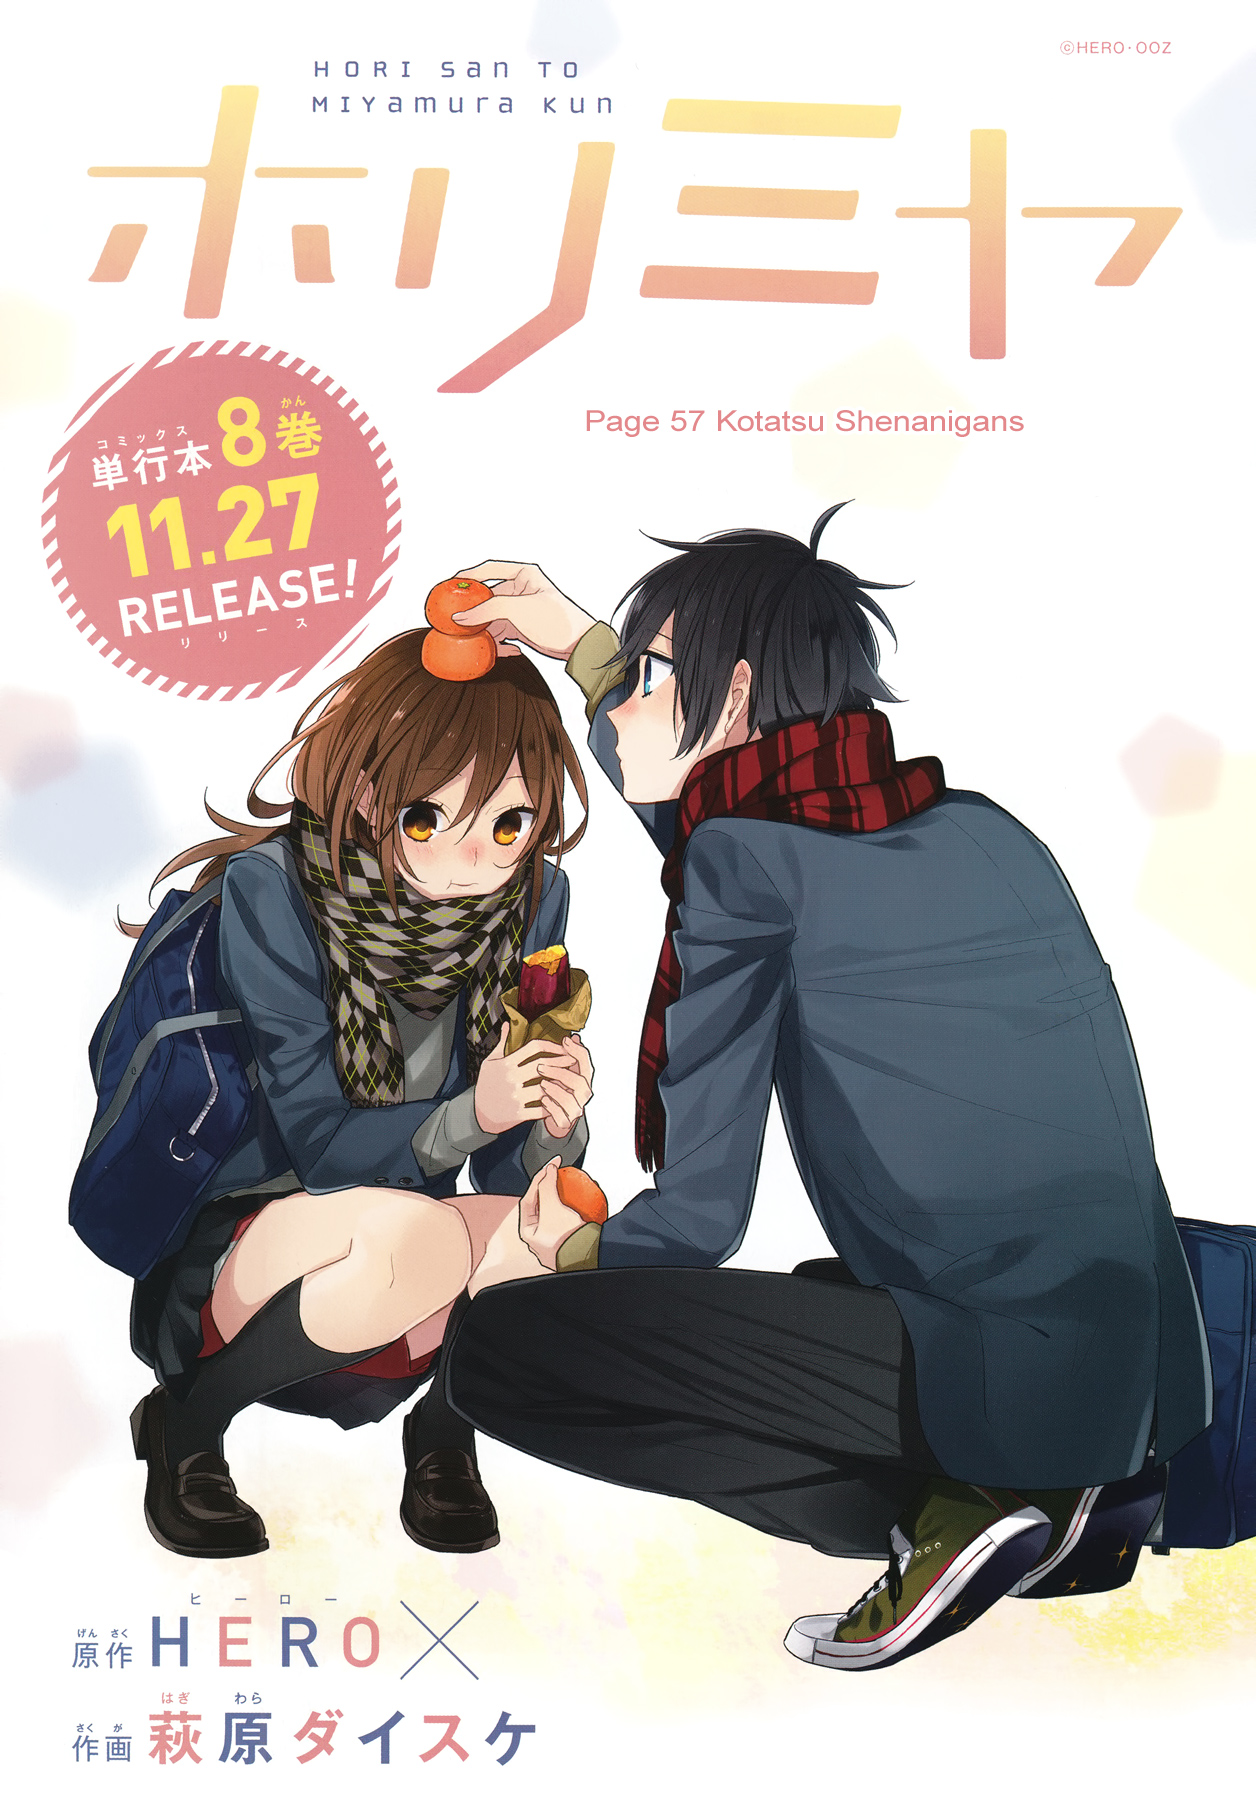 Image result for horimiya manga cover